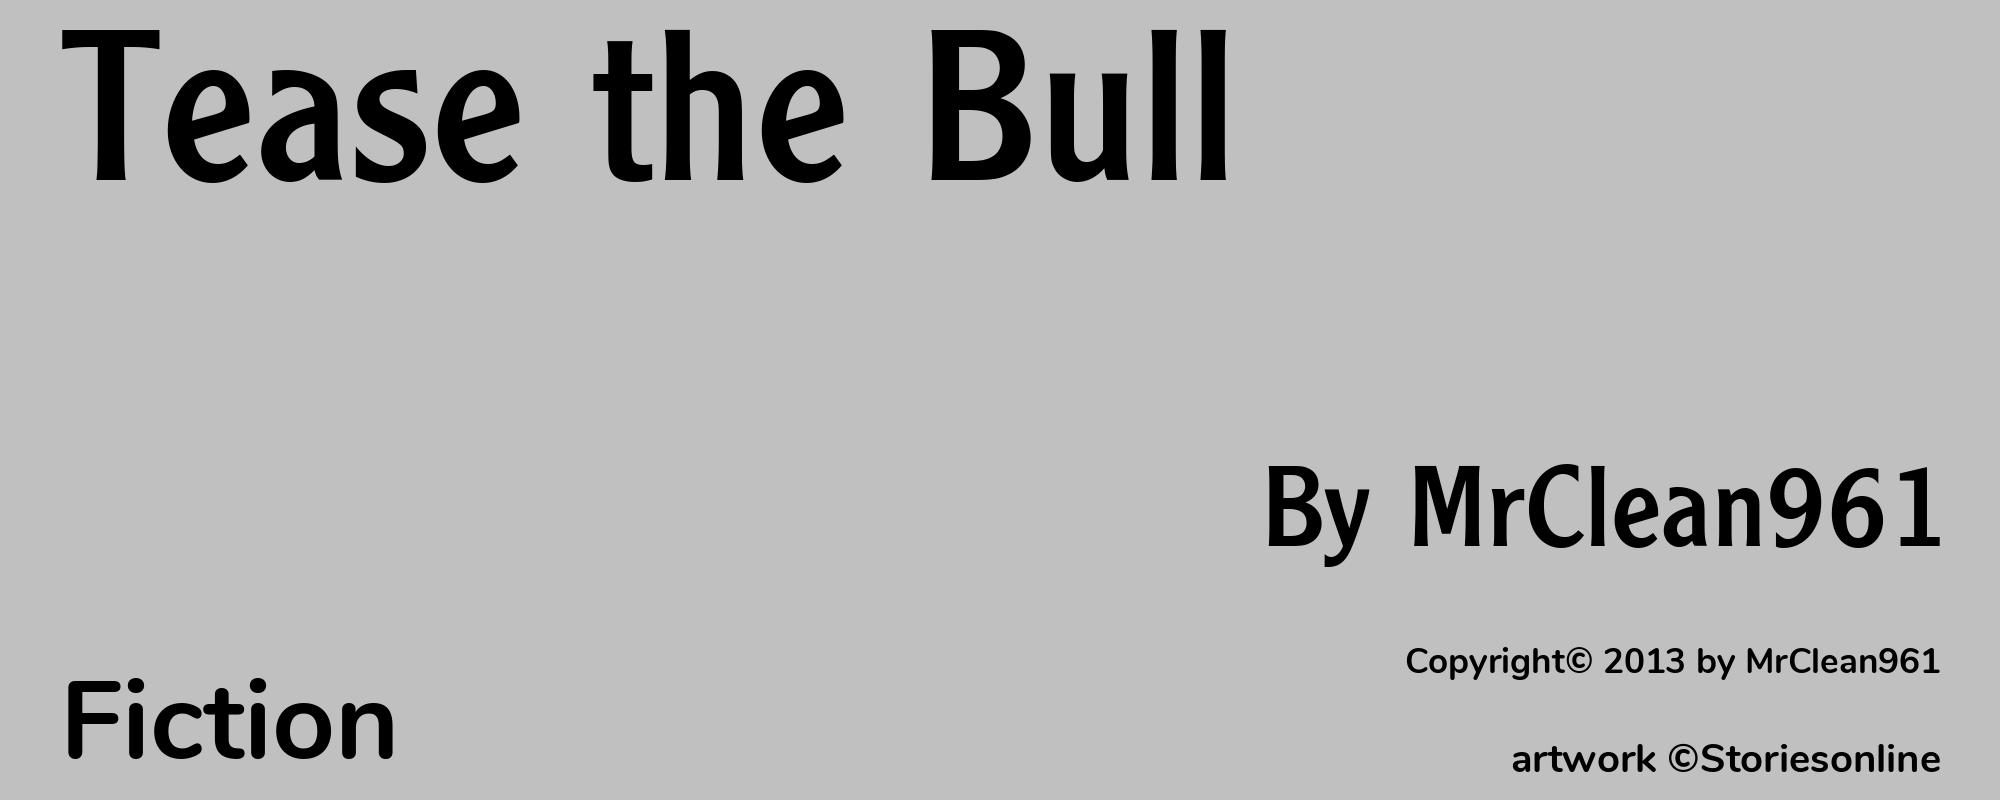 Tease the Bull - Cover